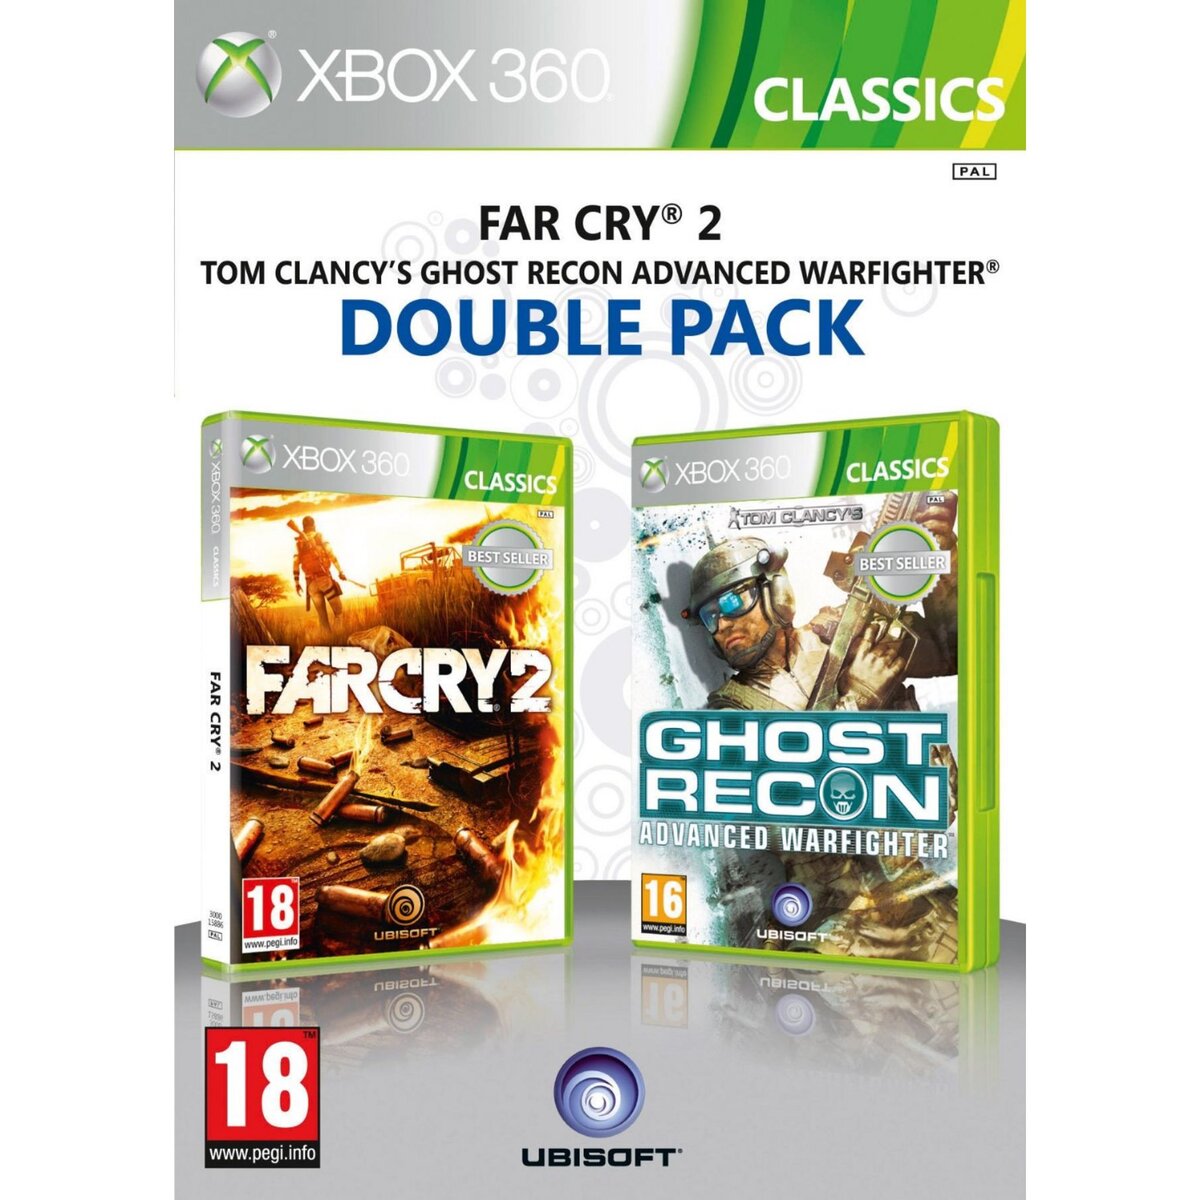 Double pack jeux Xbox 360